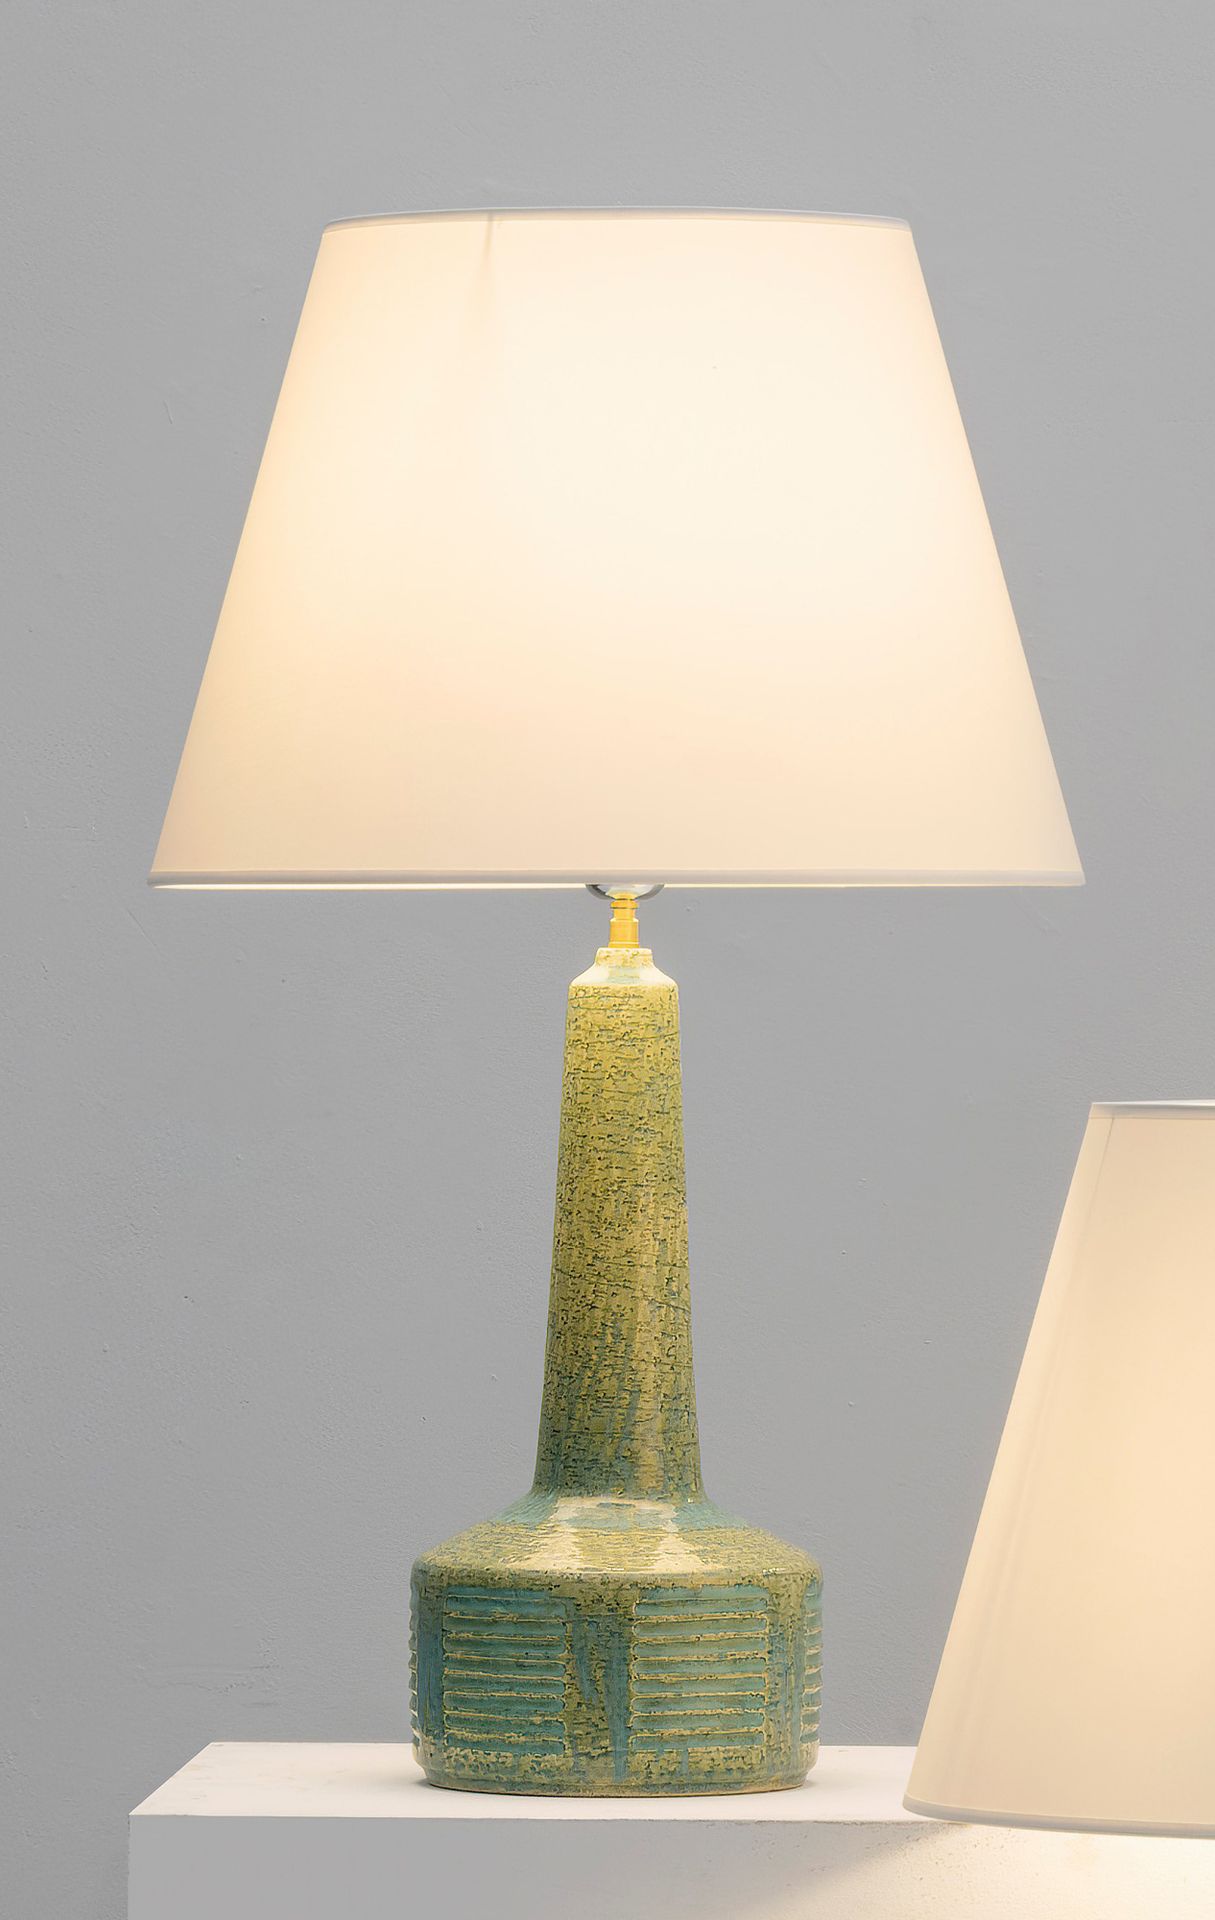 PER LINNEMANN-SCHMIDT (1912-1999) DL26
台灯
陶瓷。
出版商的标记和模型名称。
Tafellamp
Keramisch。
&hellip;